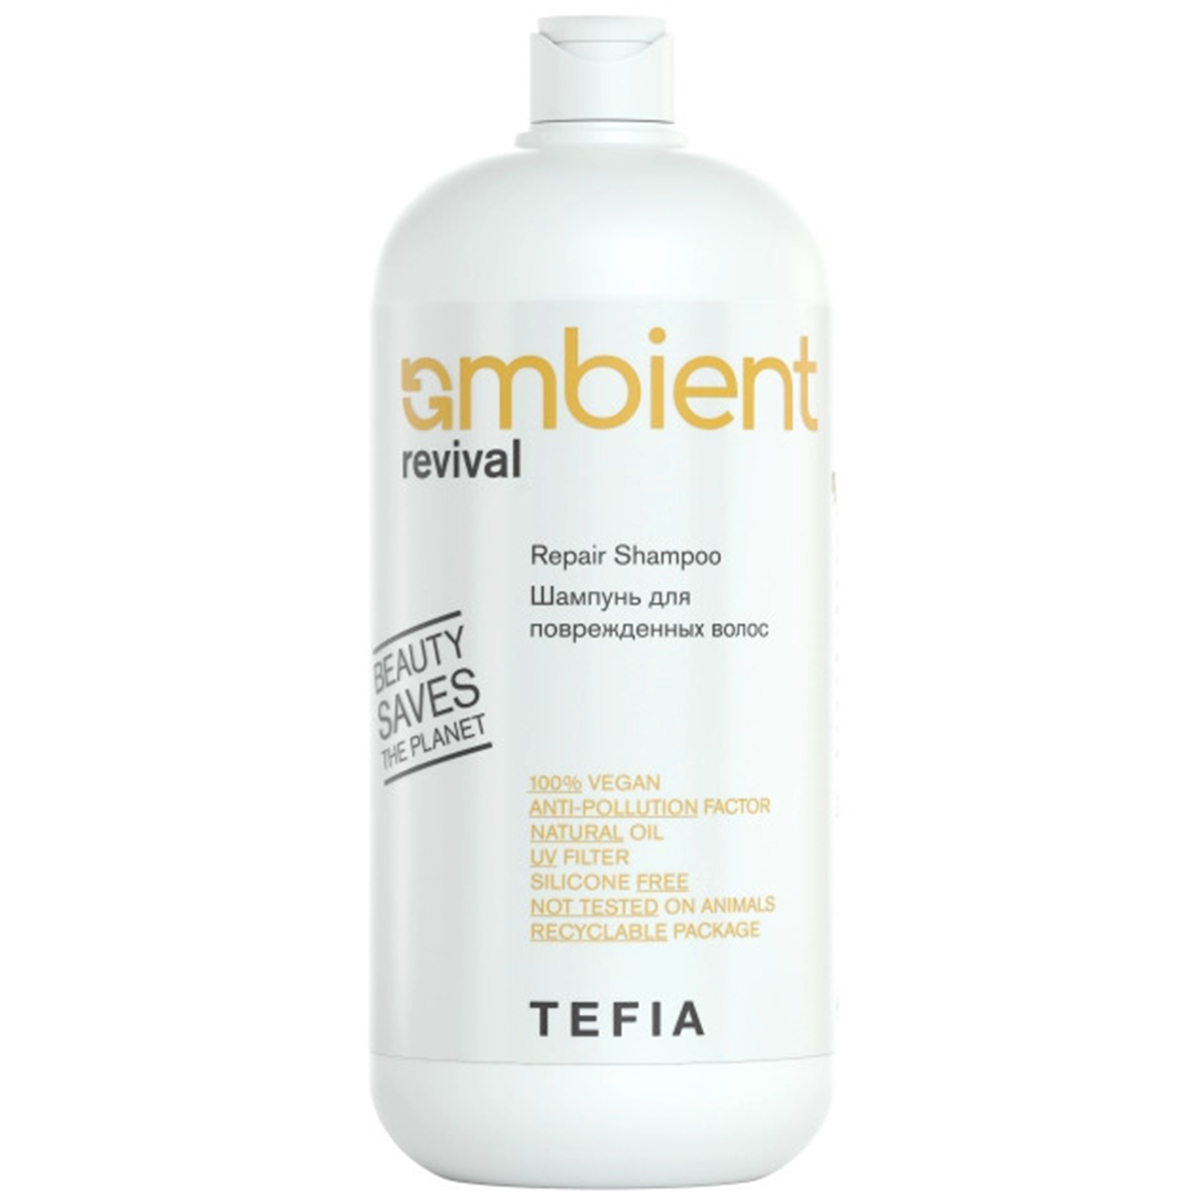 Tefia Шампунь для поврежденных волос, 950 мл (Tefia, Ambient) tefia ambient revival шампунь для поврежденных волос 950 мл